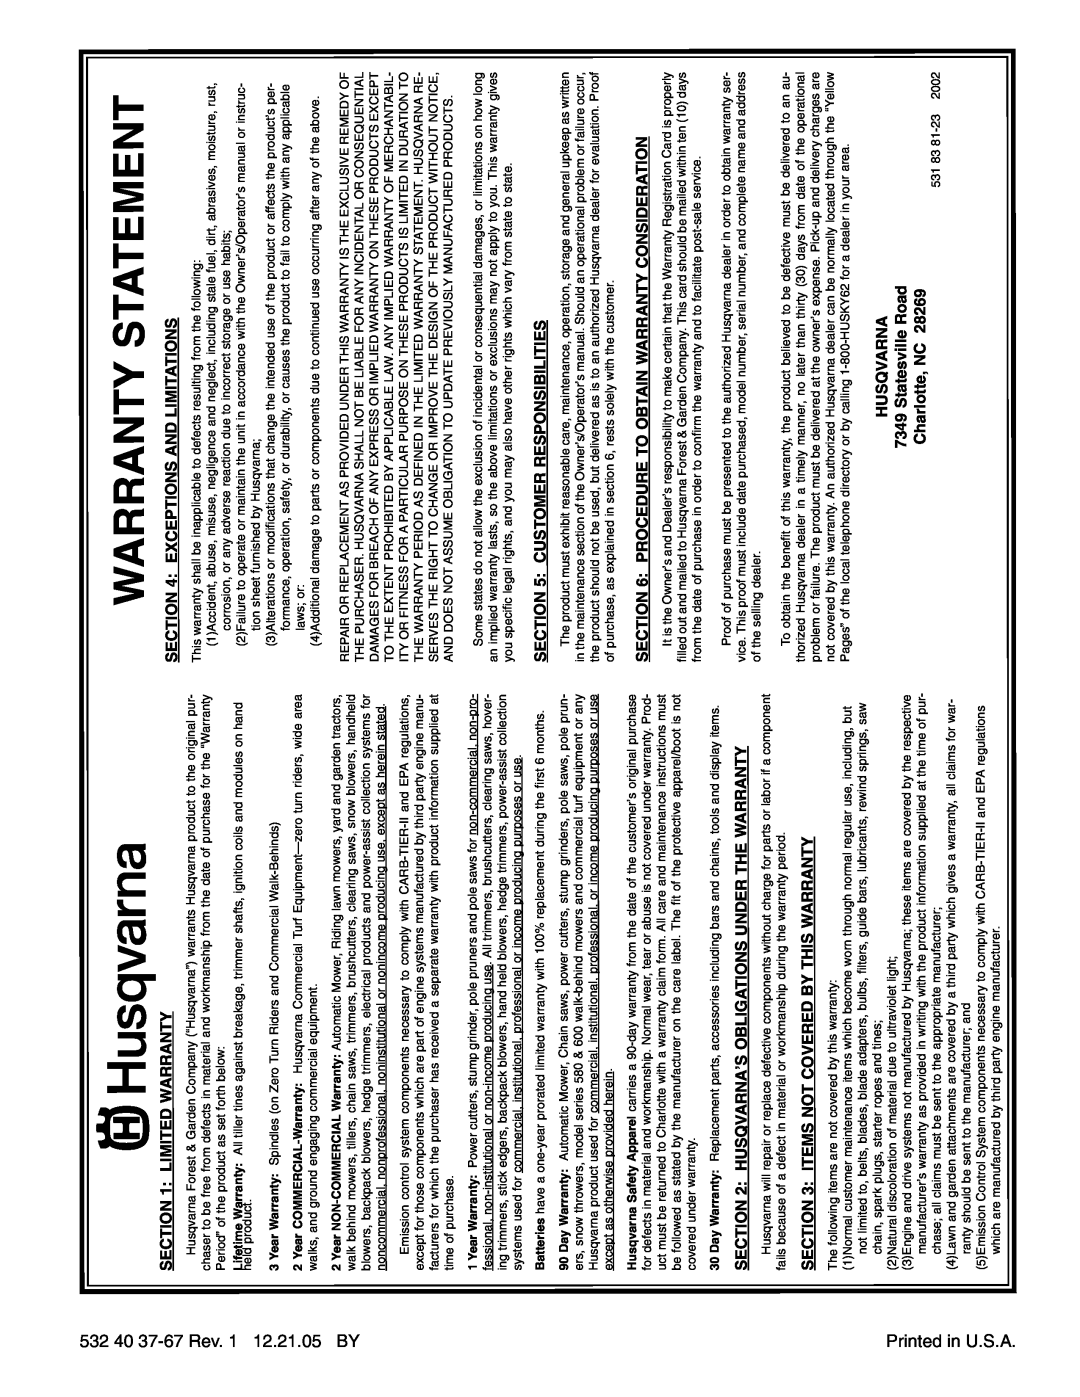 Husqvarna 9527SBEB Statementwarranty, 532 40 37-67 Rev. 1 12.21.05 BY, Printed in U.S.A, 2002 23-81, Anr Avsq Uh 